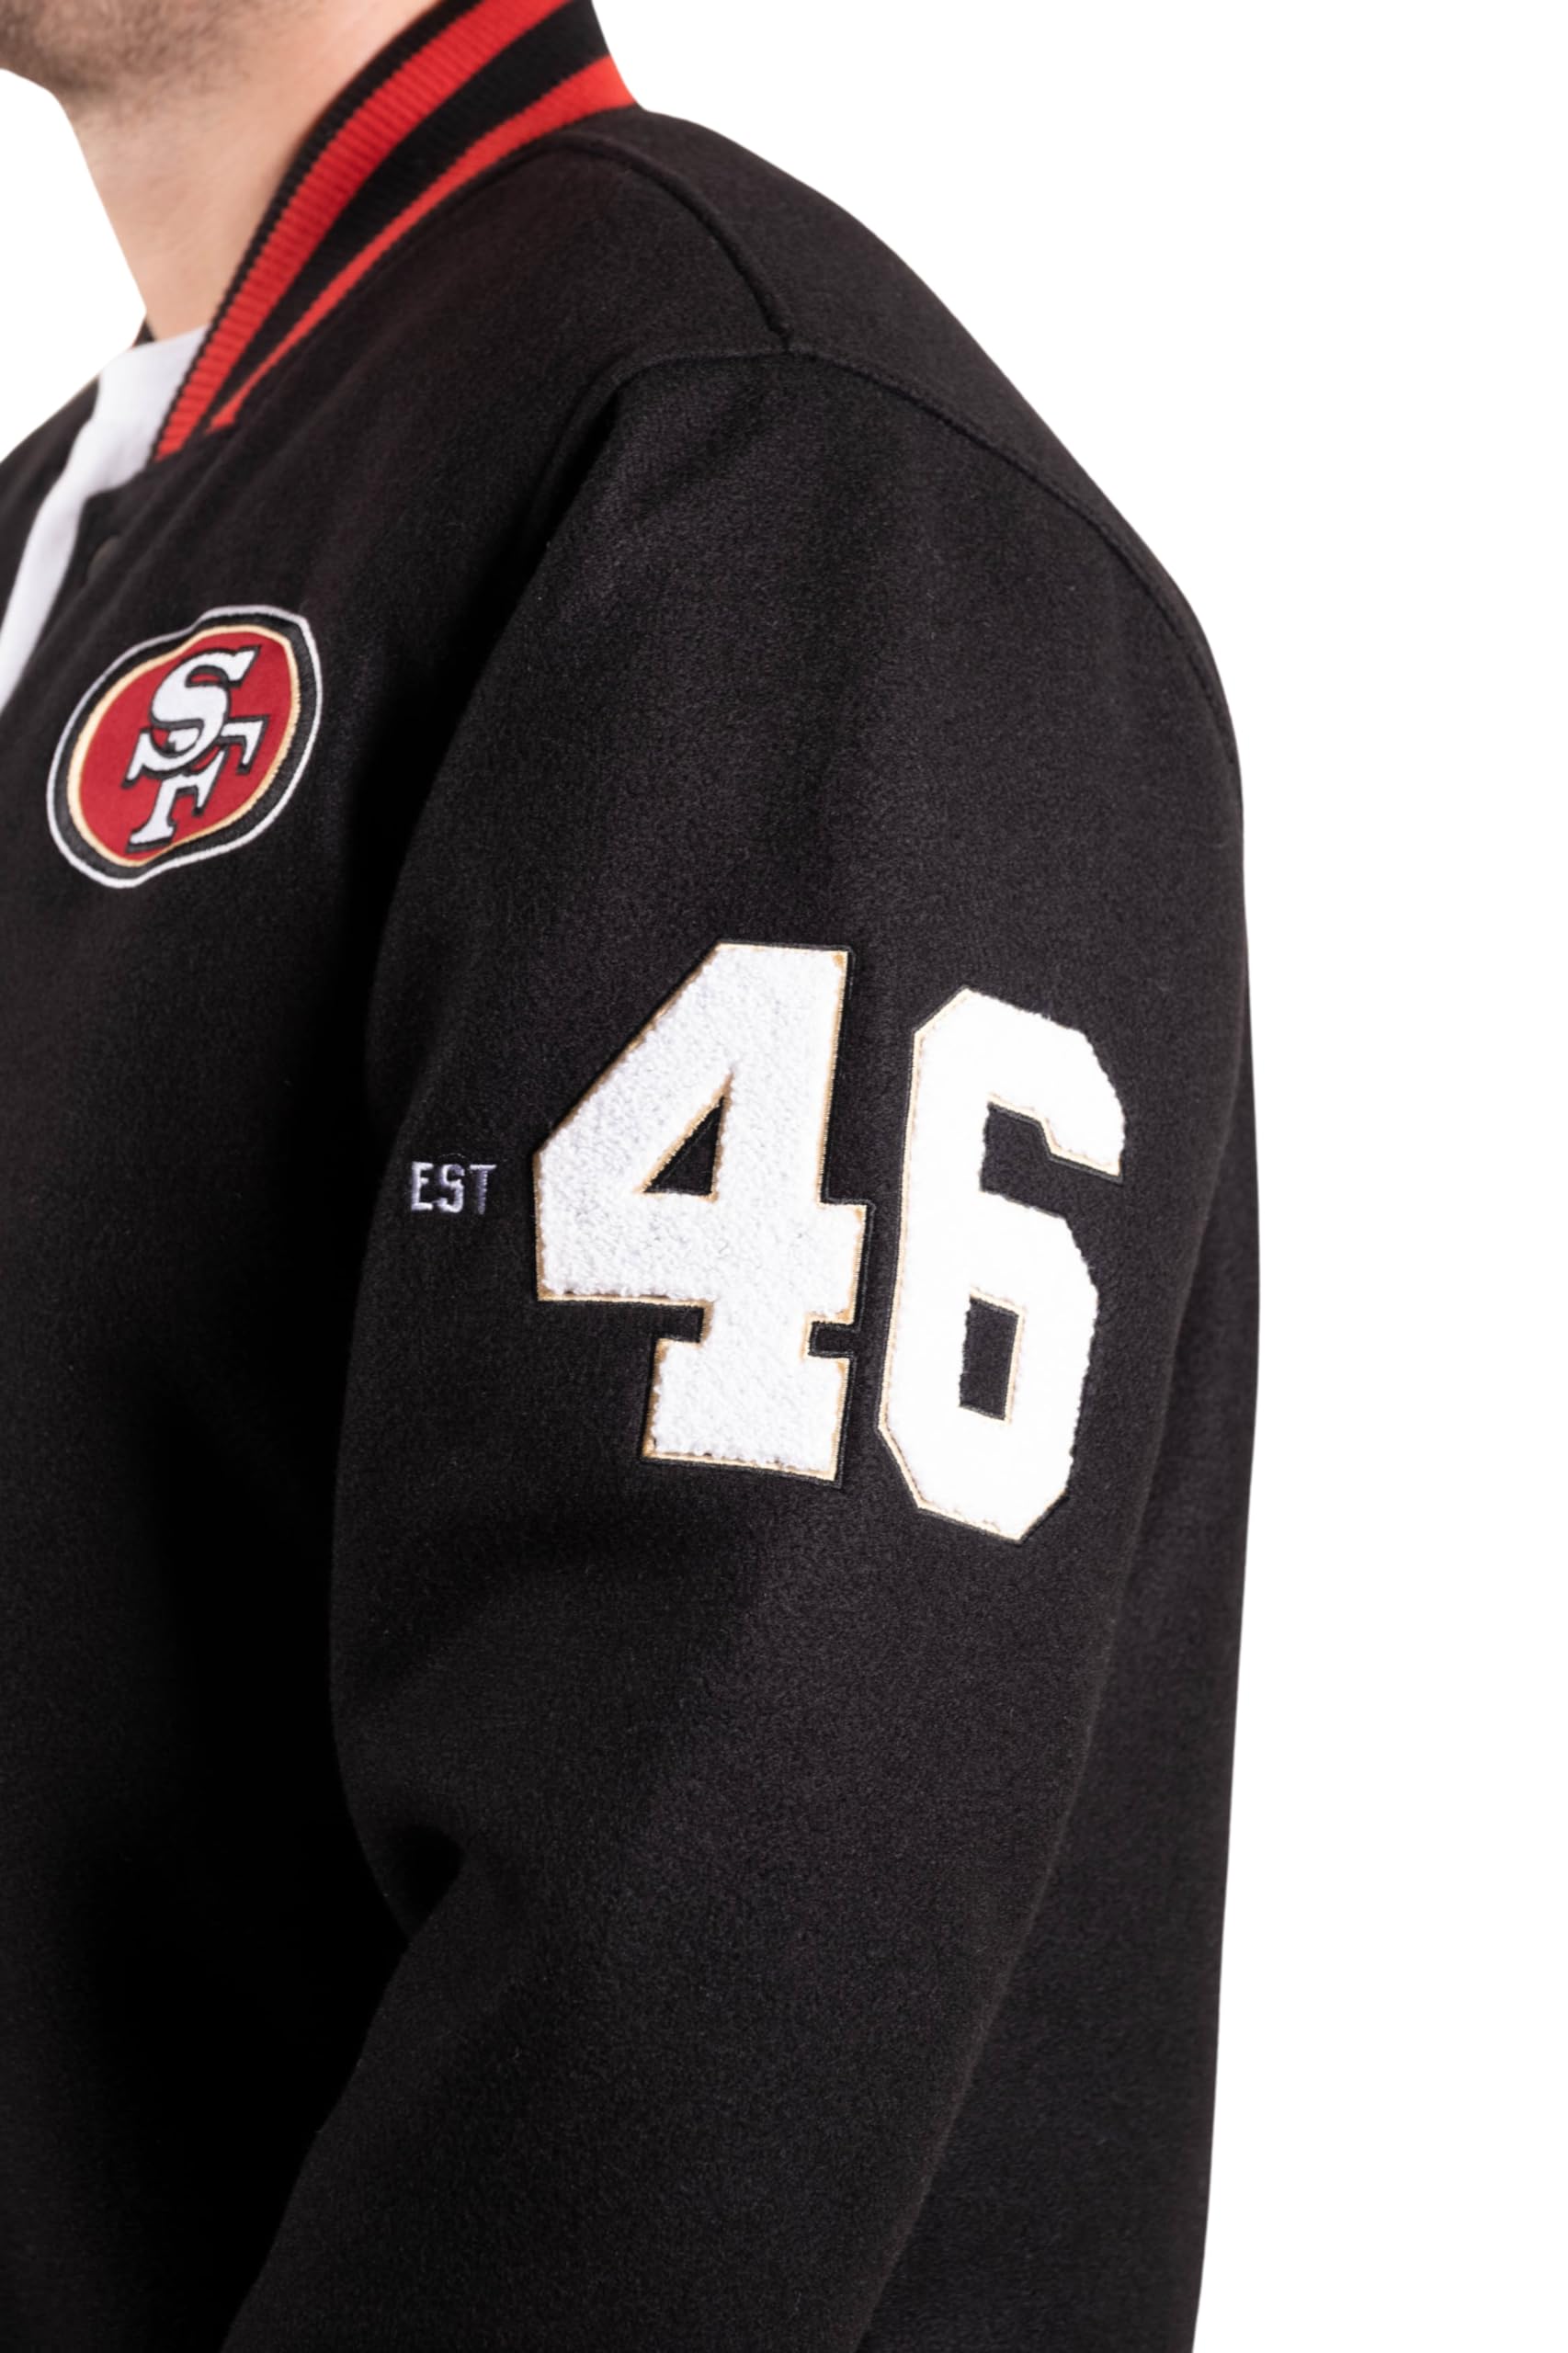 Ultra Game NFL San Francisco 49ers Mens Classic Varsity Coaches Jacket|San Francisco 49ers